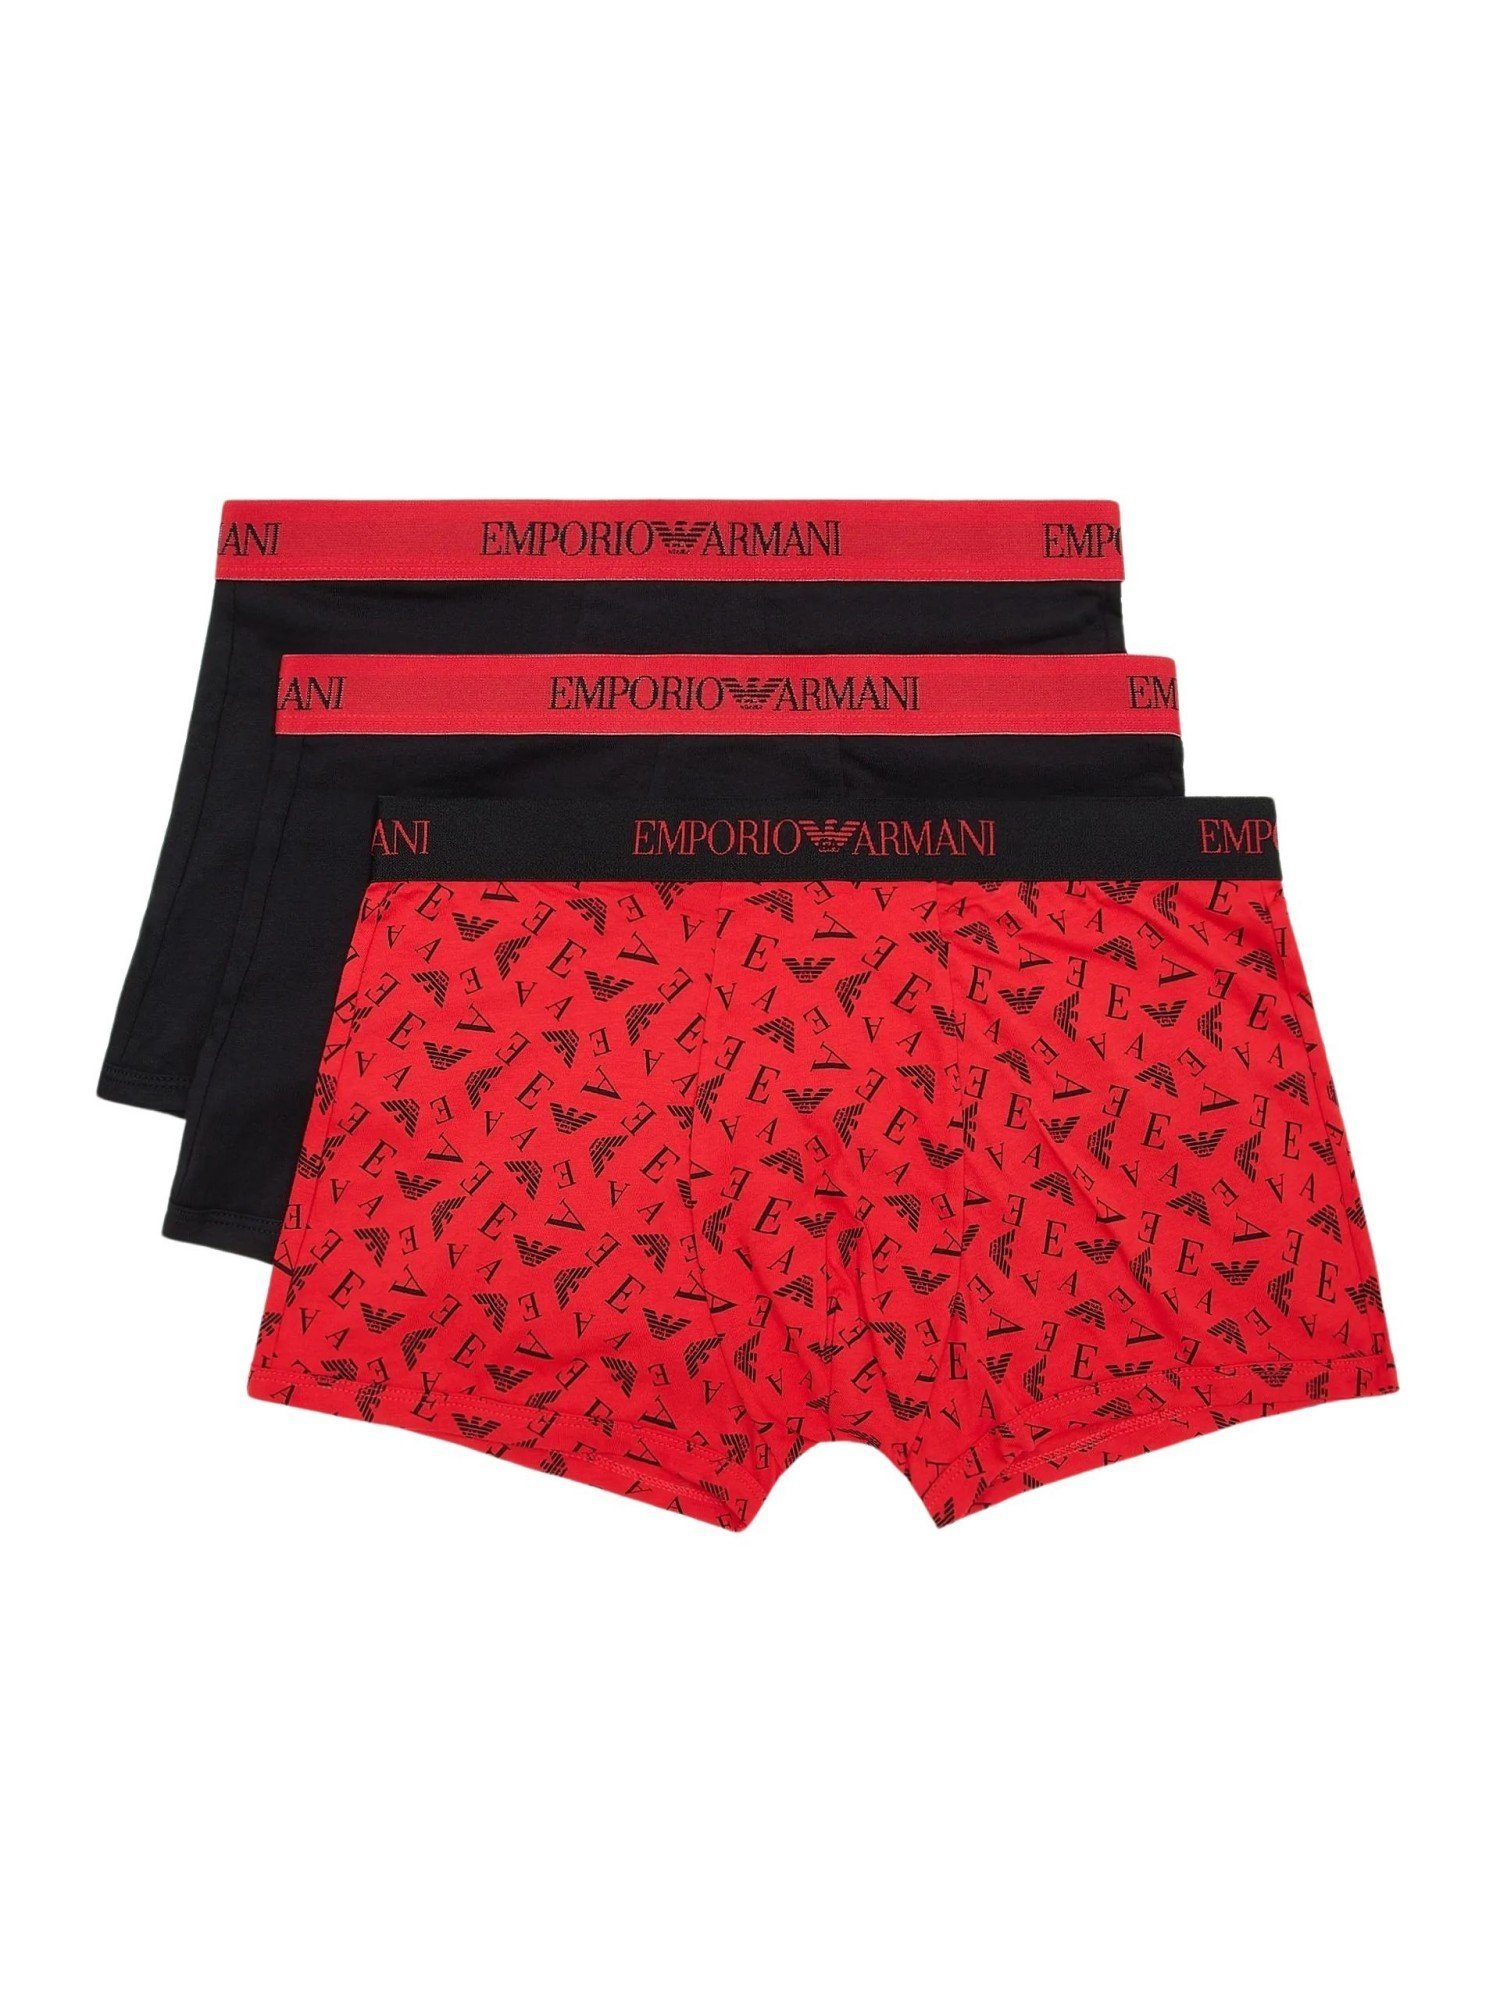 Emporio Armani 3 Shorts Schwarz/Rot (3-St) Boxershorts Knit Trunks Pack